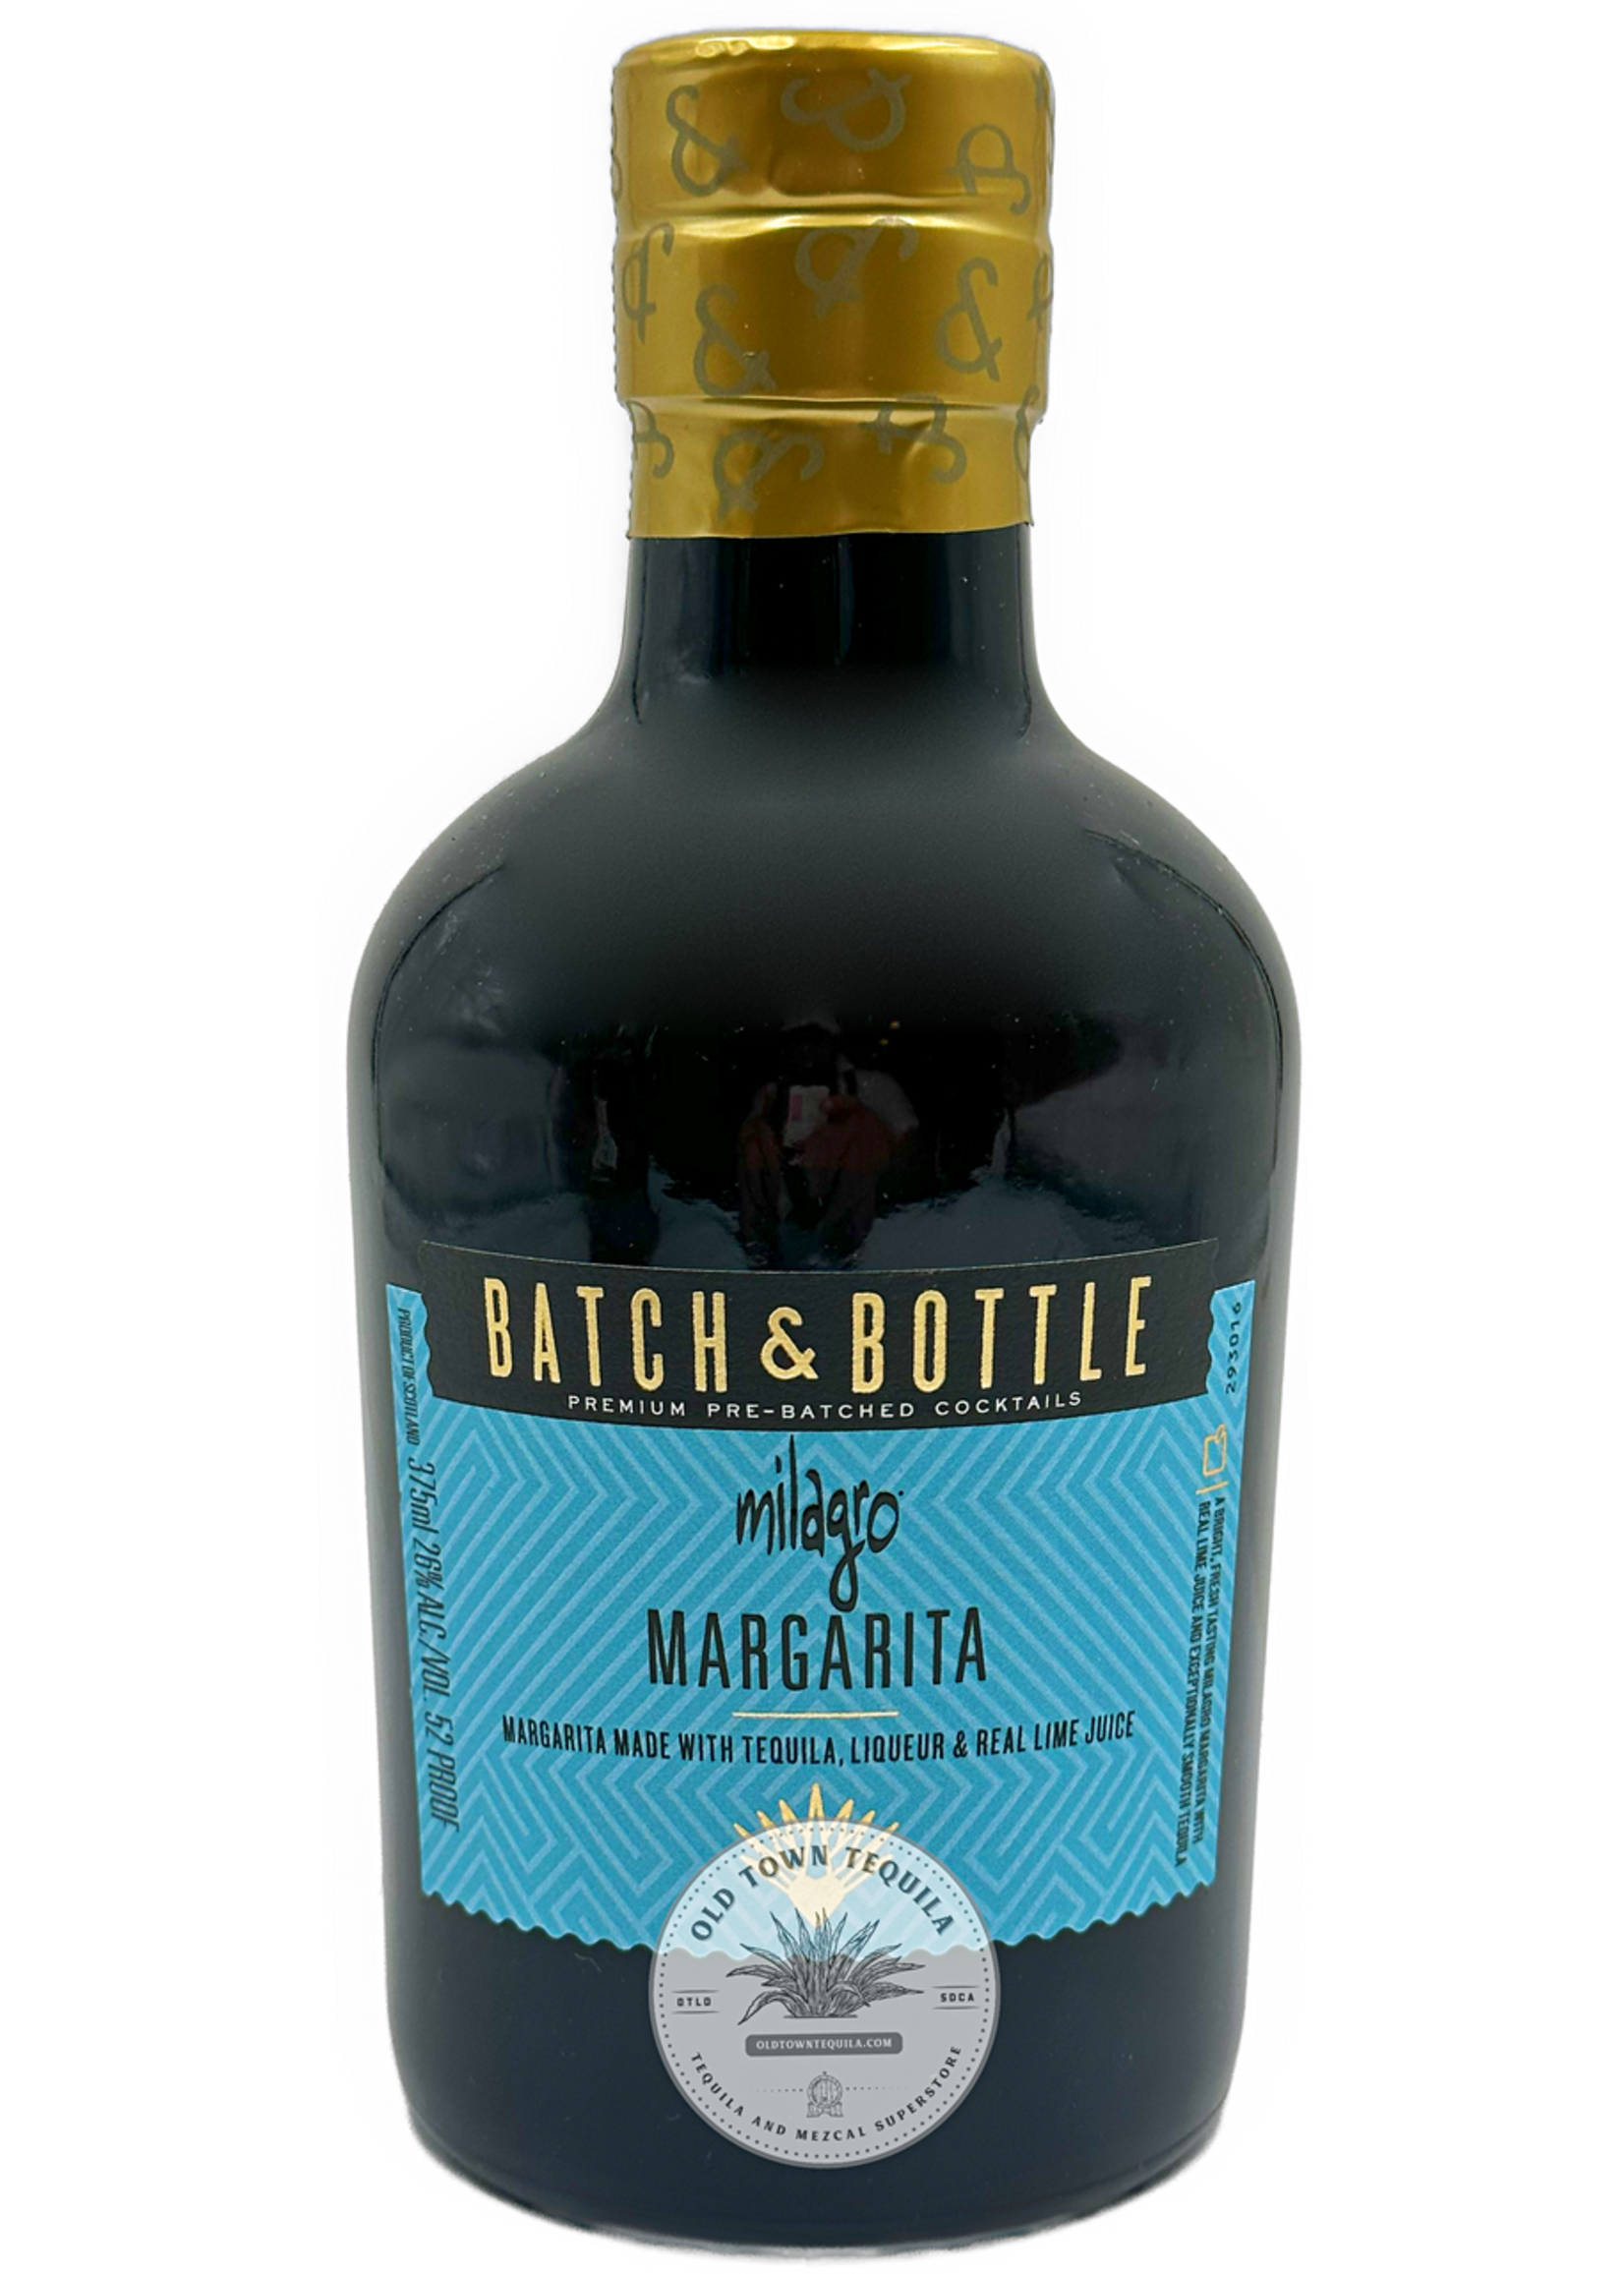 Batch & Bottle Batch & Bottle / Milagro Margarita 26% abv / 375mL